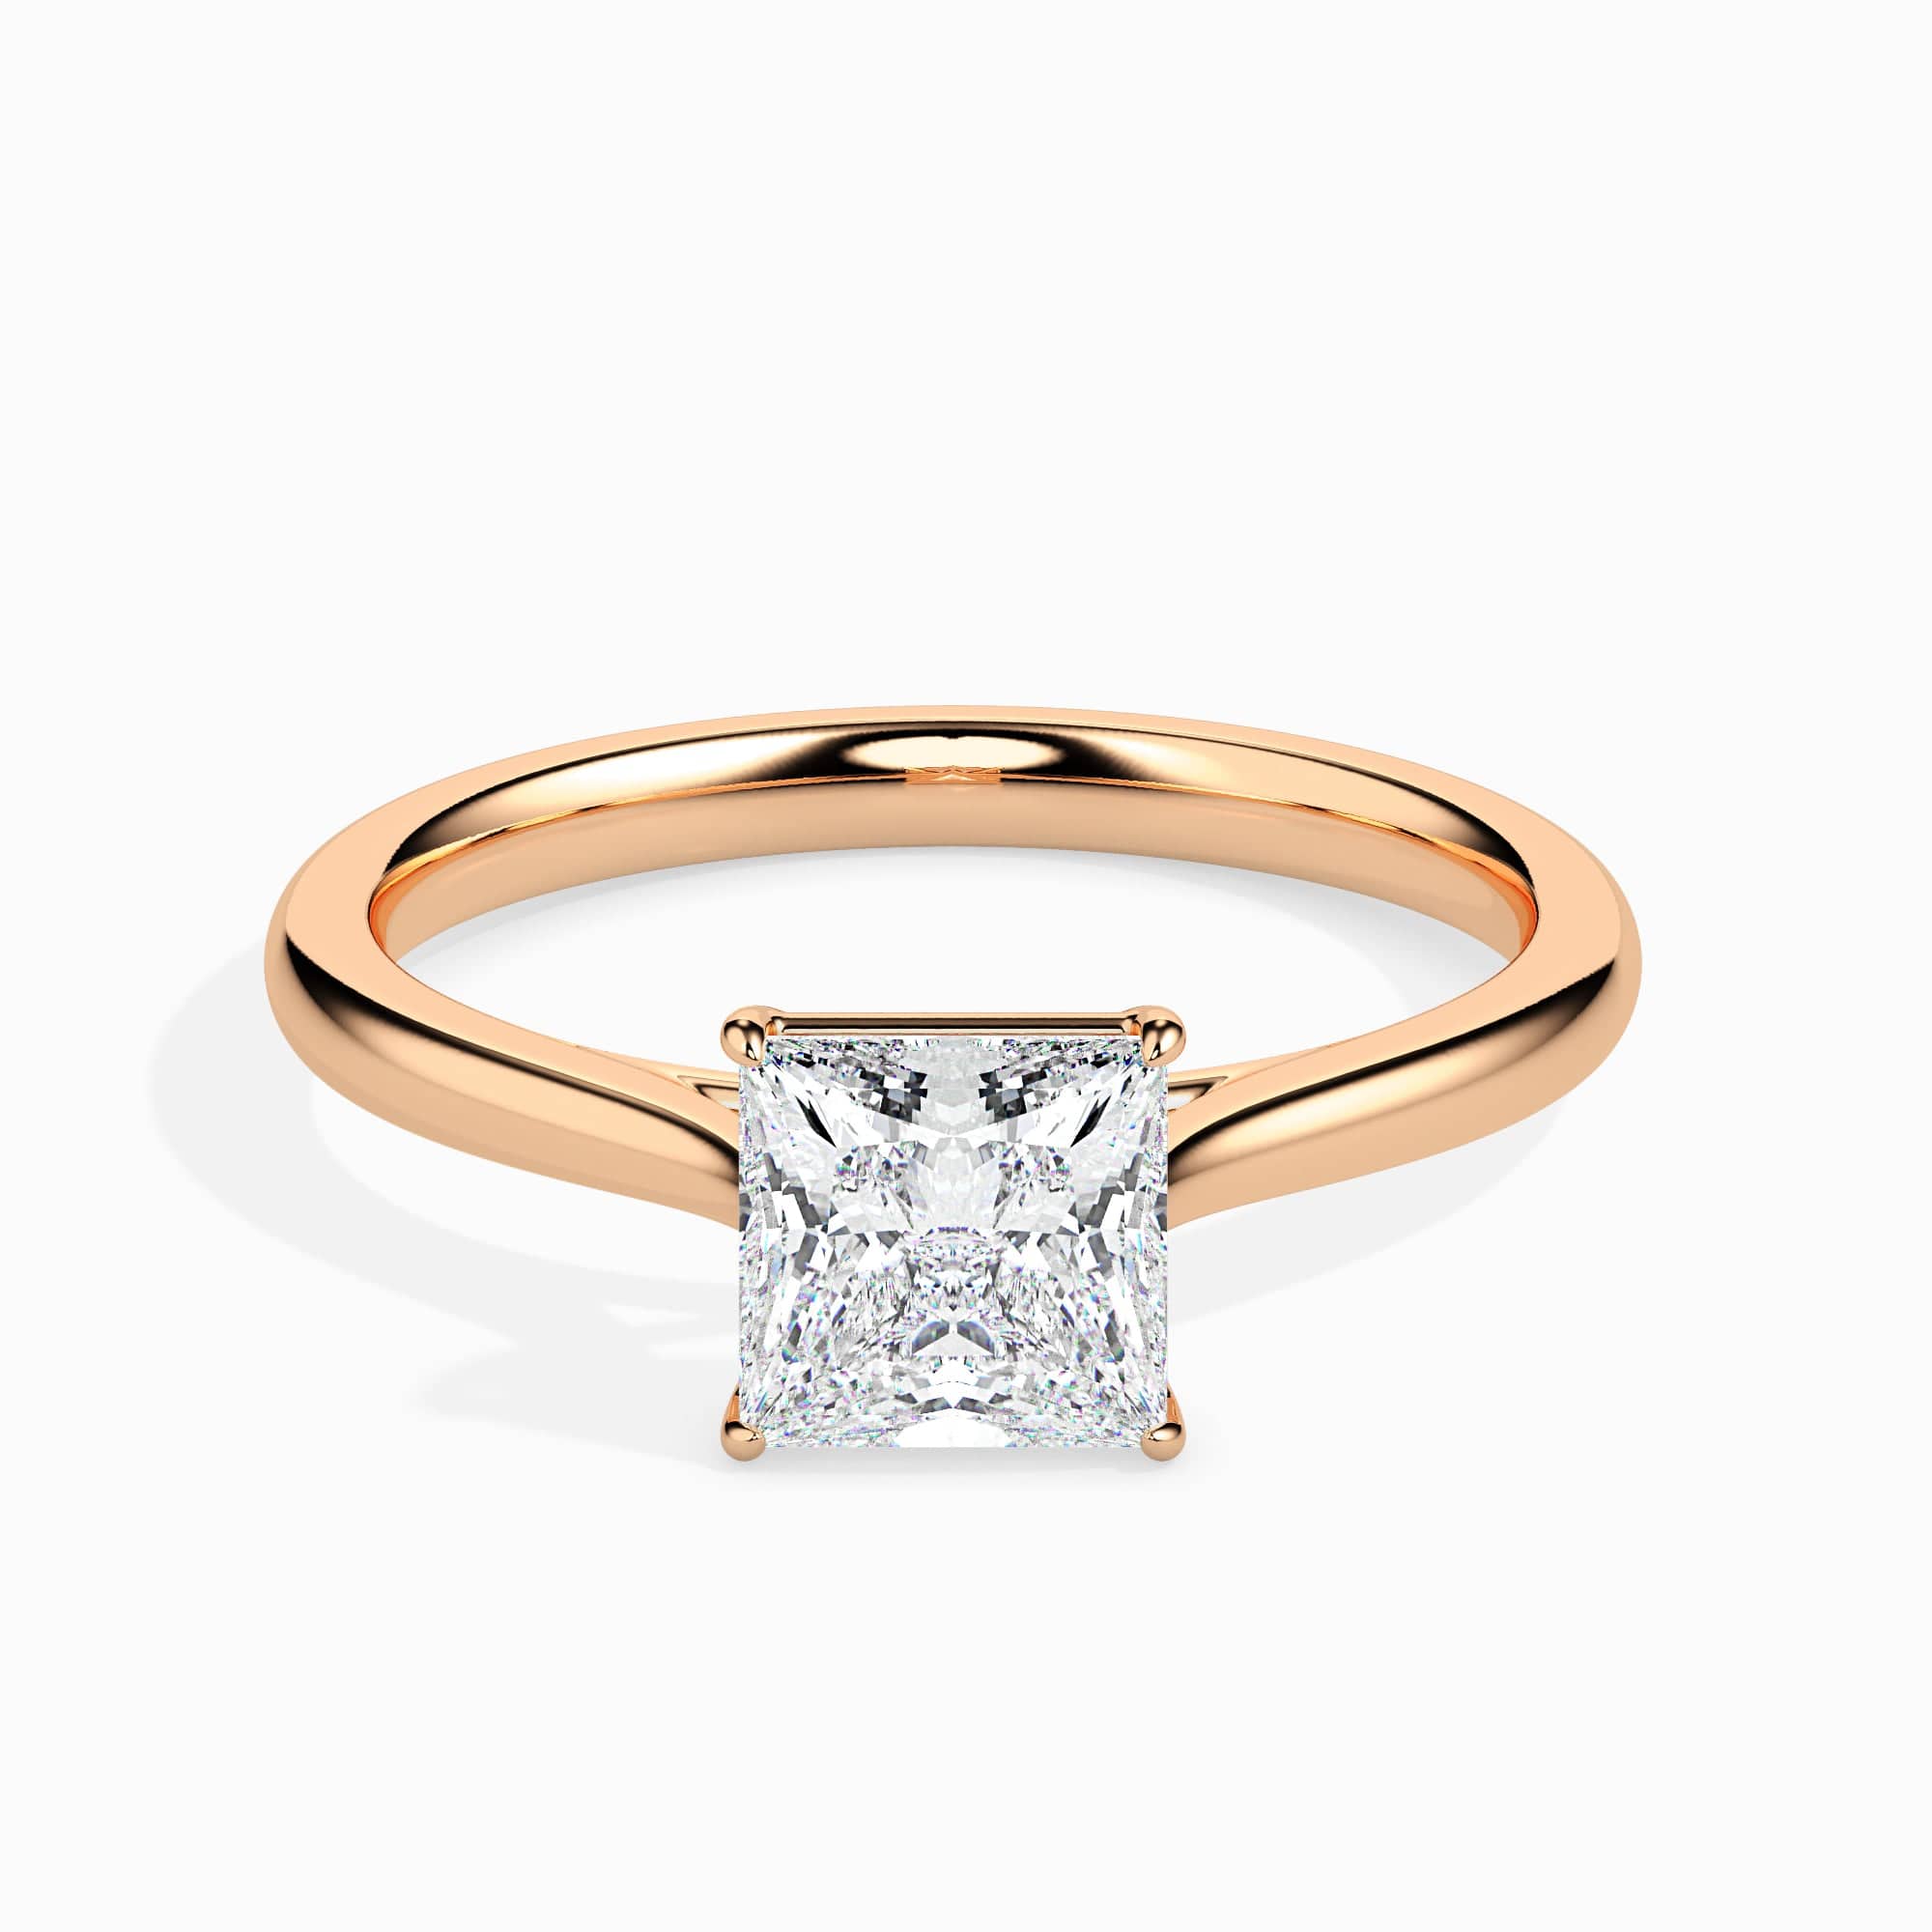 Diamonds 101: Princess Cut | Frank Jewelers Blog